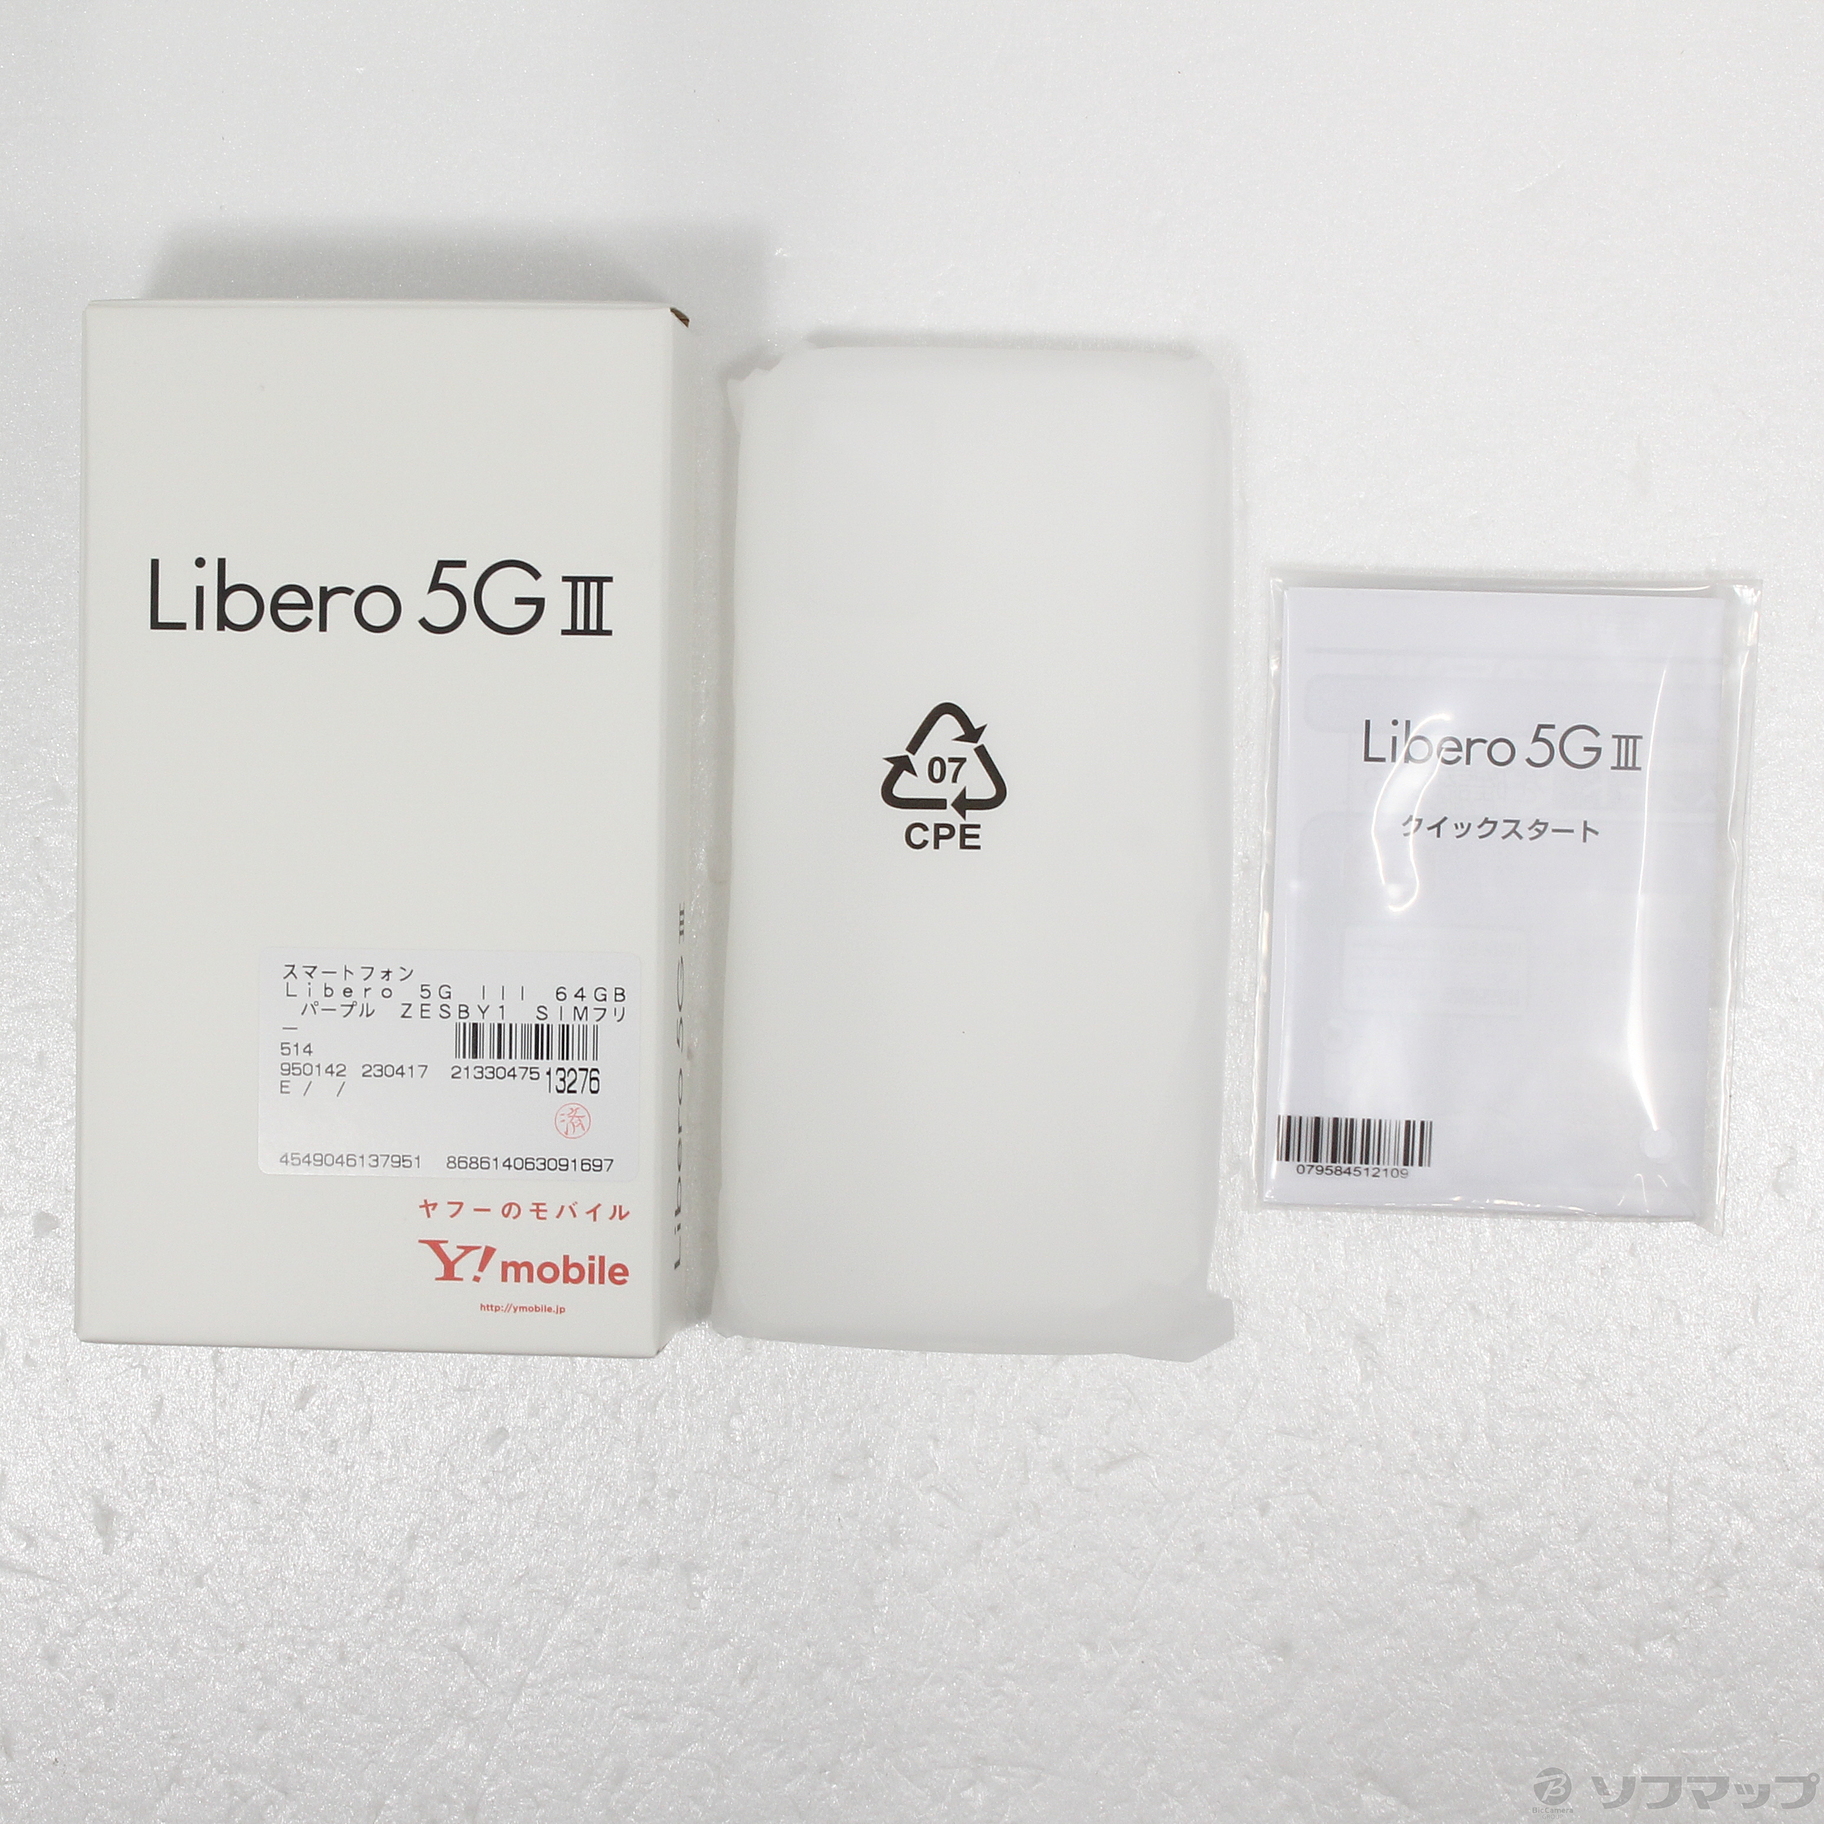 Libero 5G III パープル 64 GB Y!mobile - 携帯電話